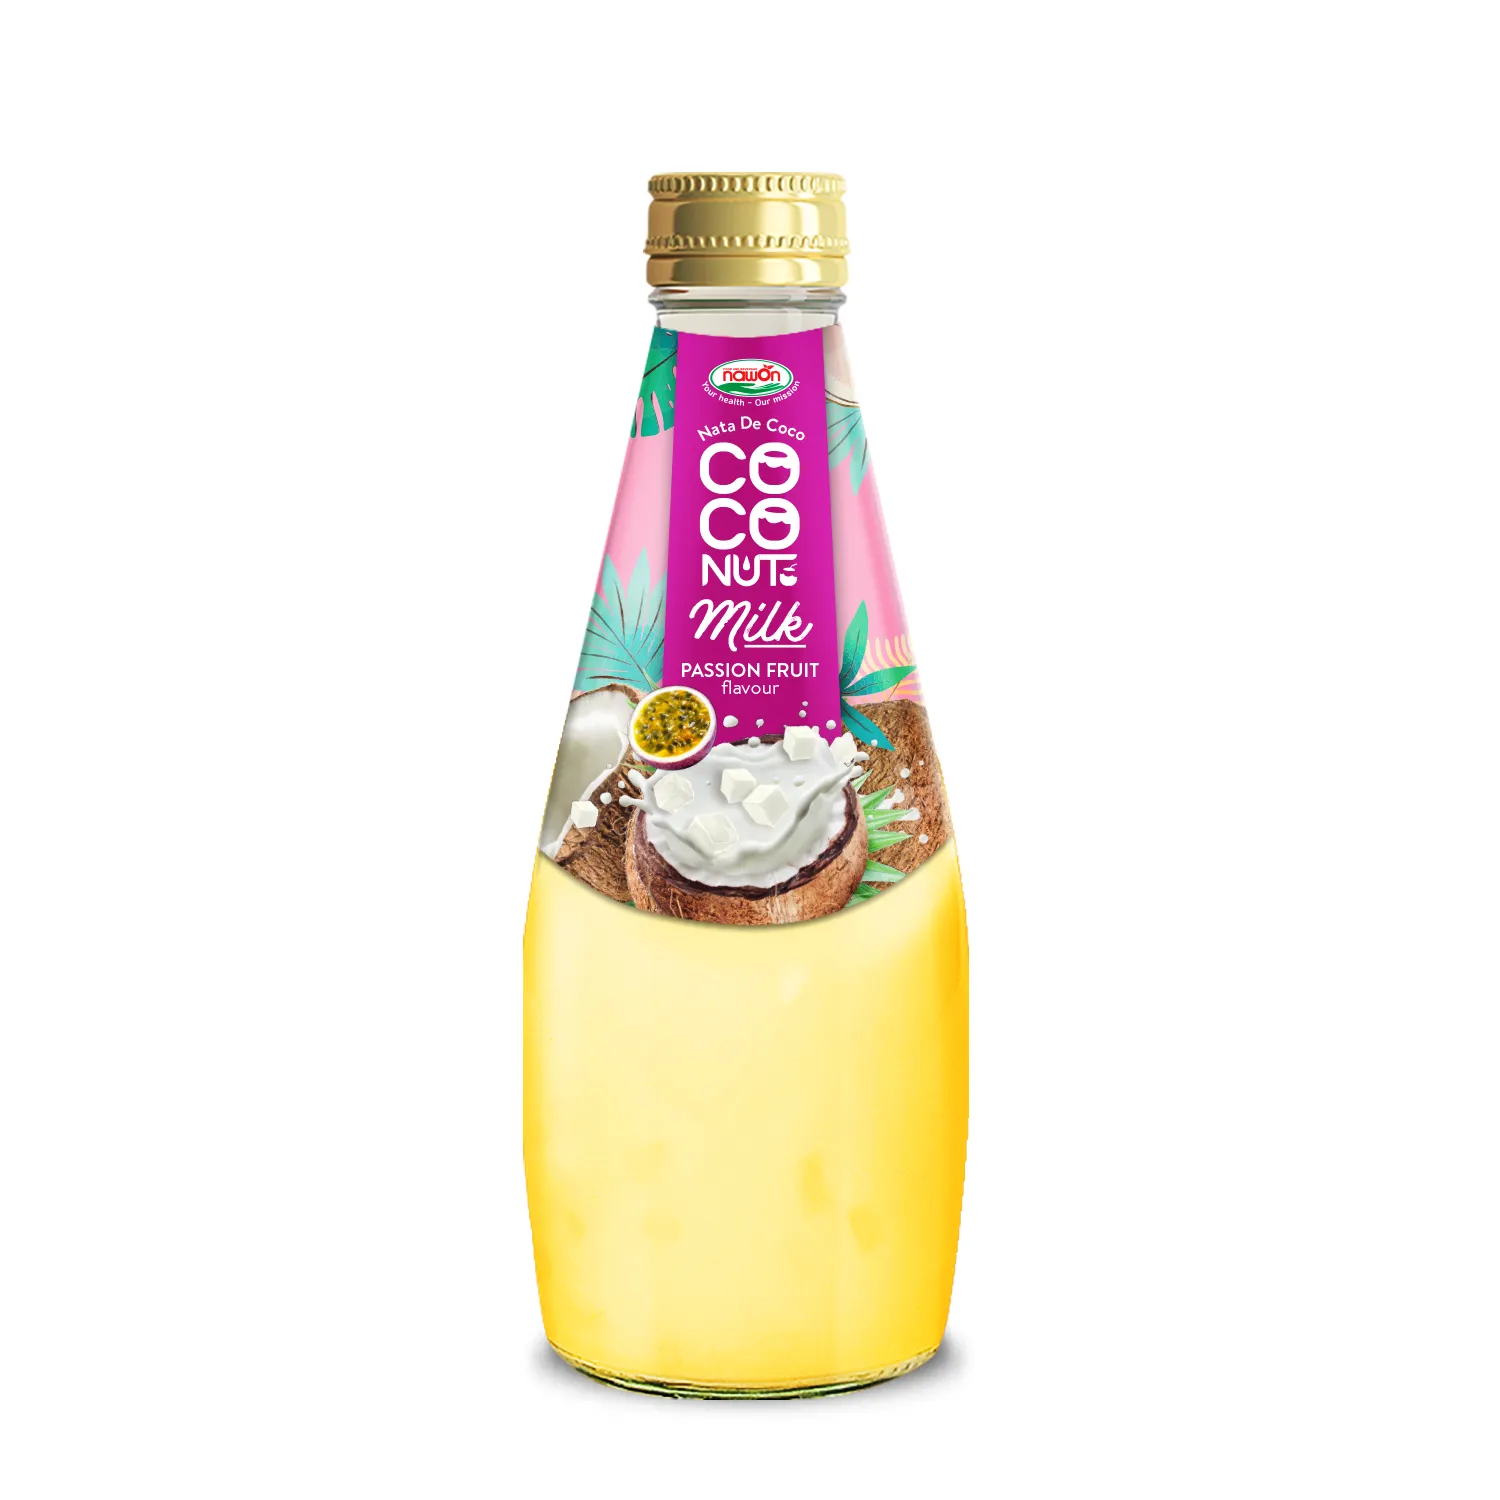 Wholesale Price 290ml Coconut Milk with Nata de Coco Passion Fruit Flavor Private Label Vietnam Beverage Manufacturer Vietnam